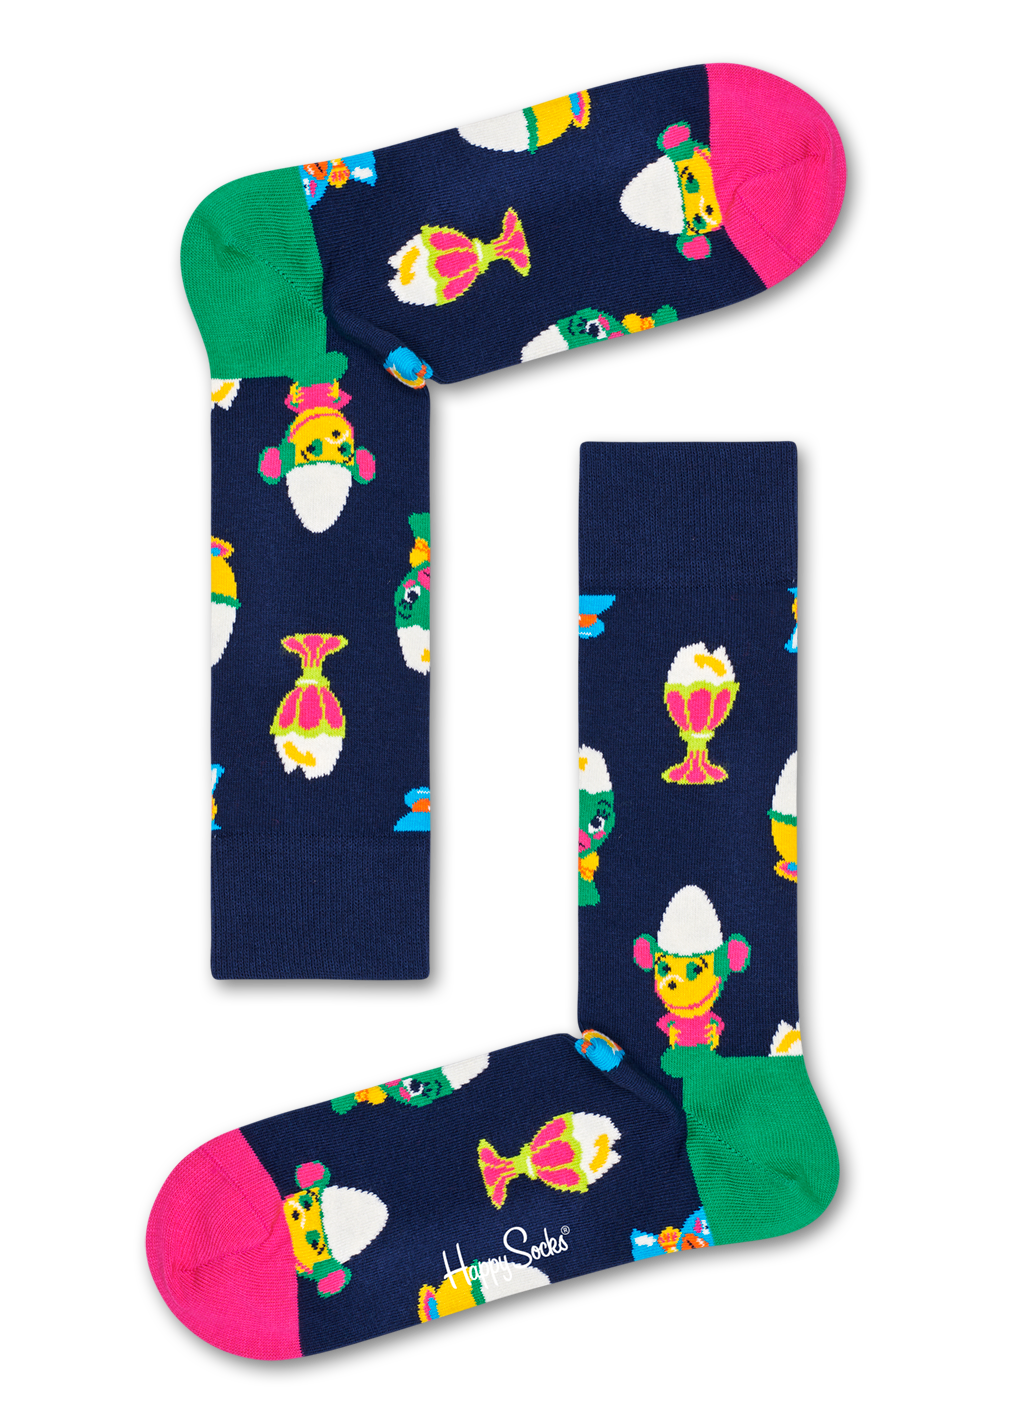 FLOSO® Womens/Ladies Plain 100% Cotton Socks (Pack Of 6) (6-9 US